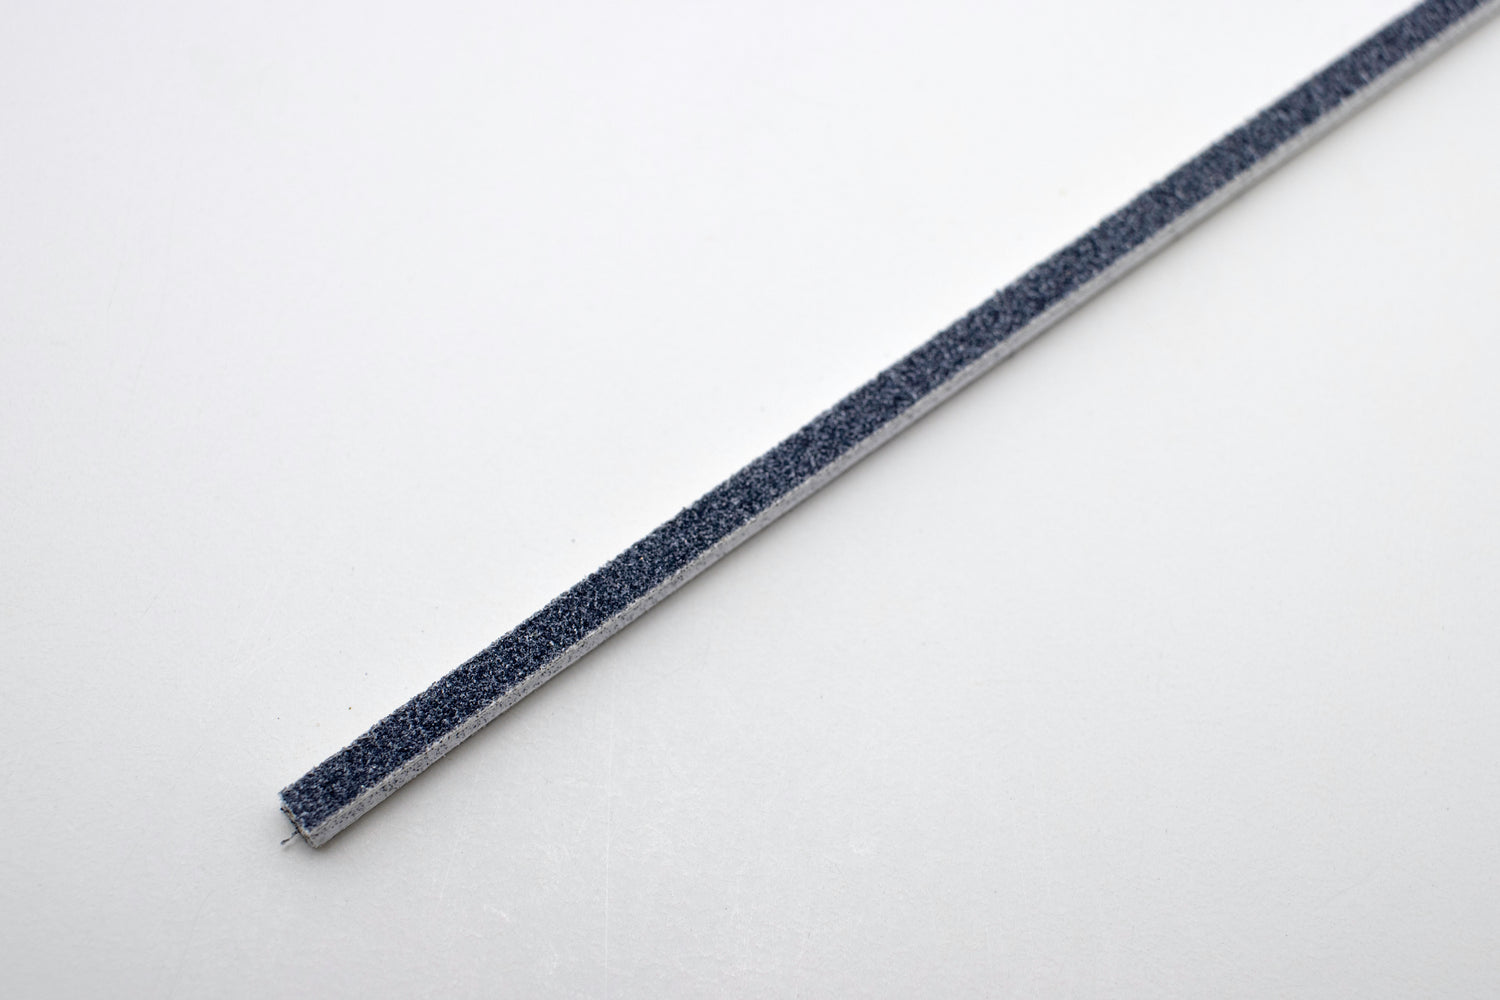 0101 Mini Hobby and Craft Sanding Sticks – Flex-I-File